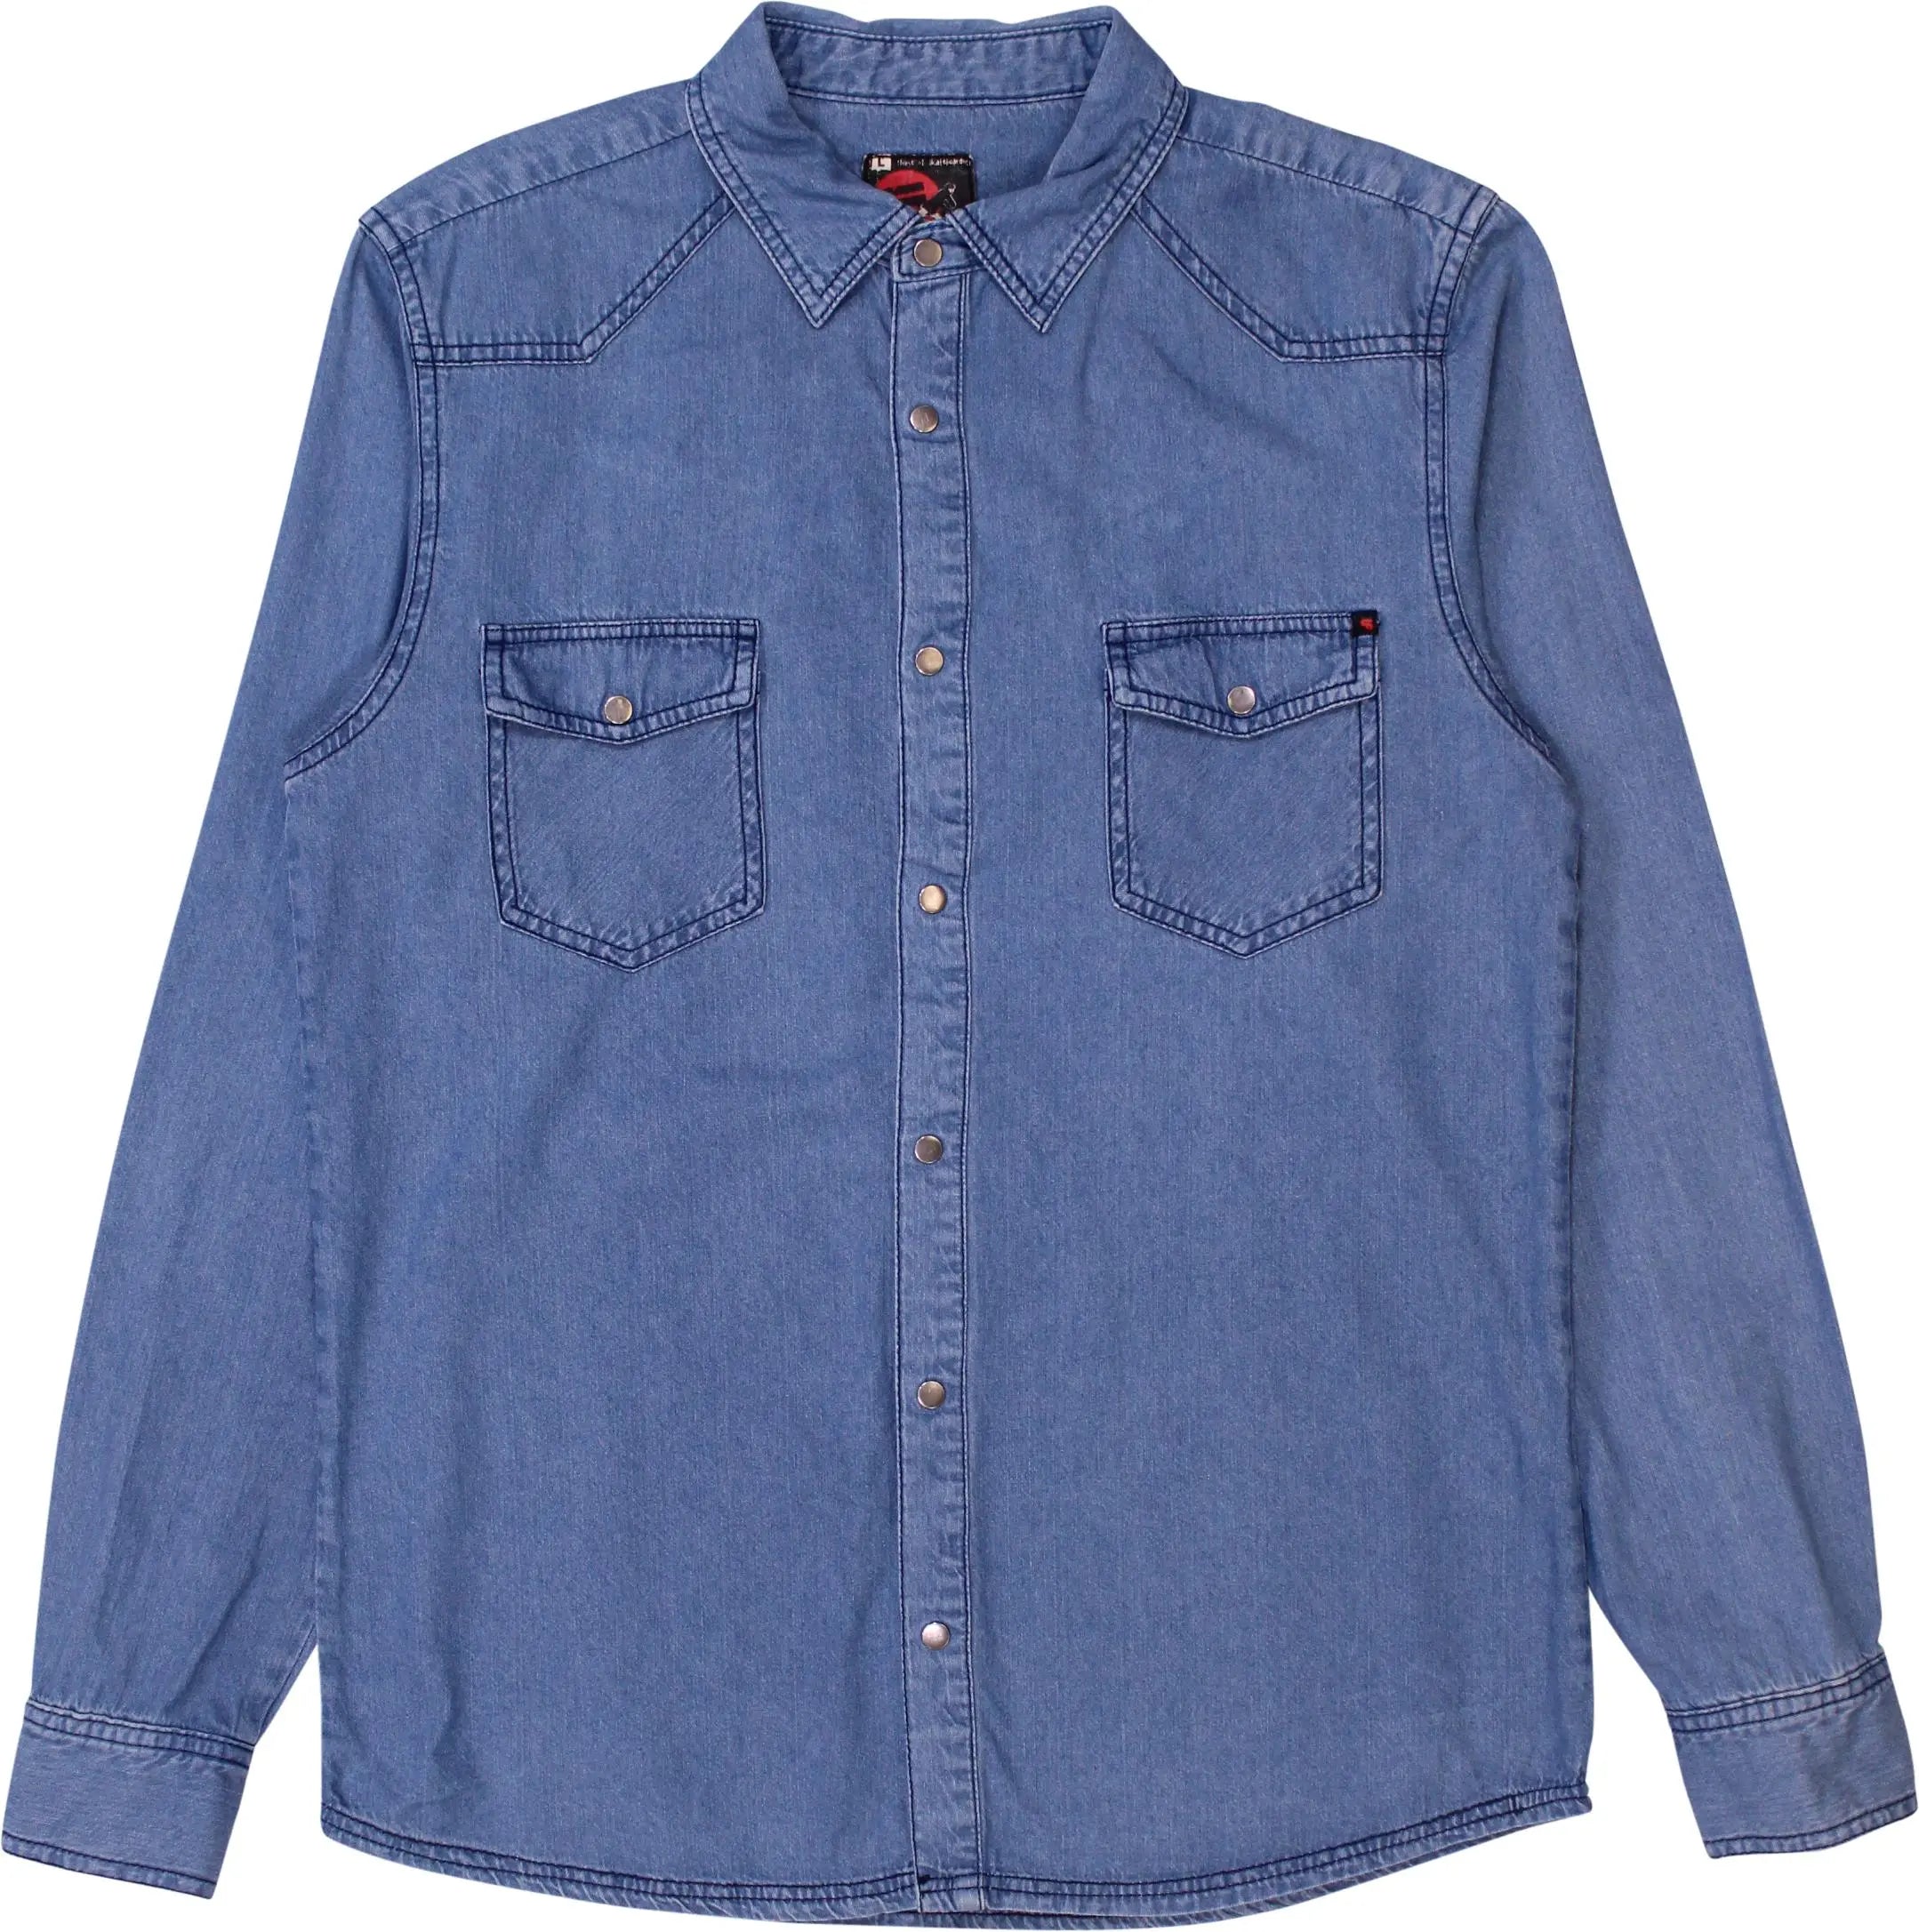 Up - Blue Denim Shirt- ThriftTale.com - Vintage and second handclothing